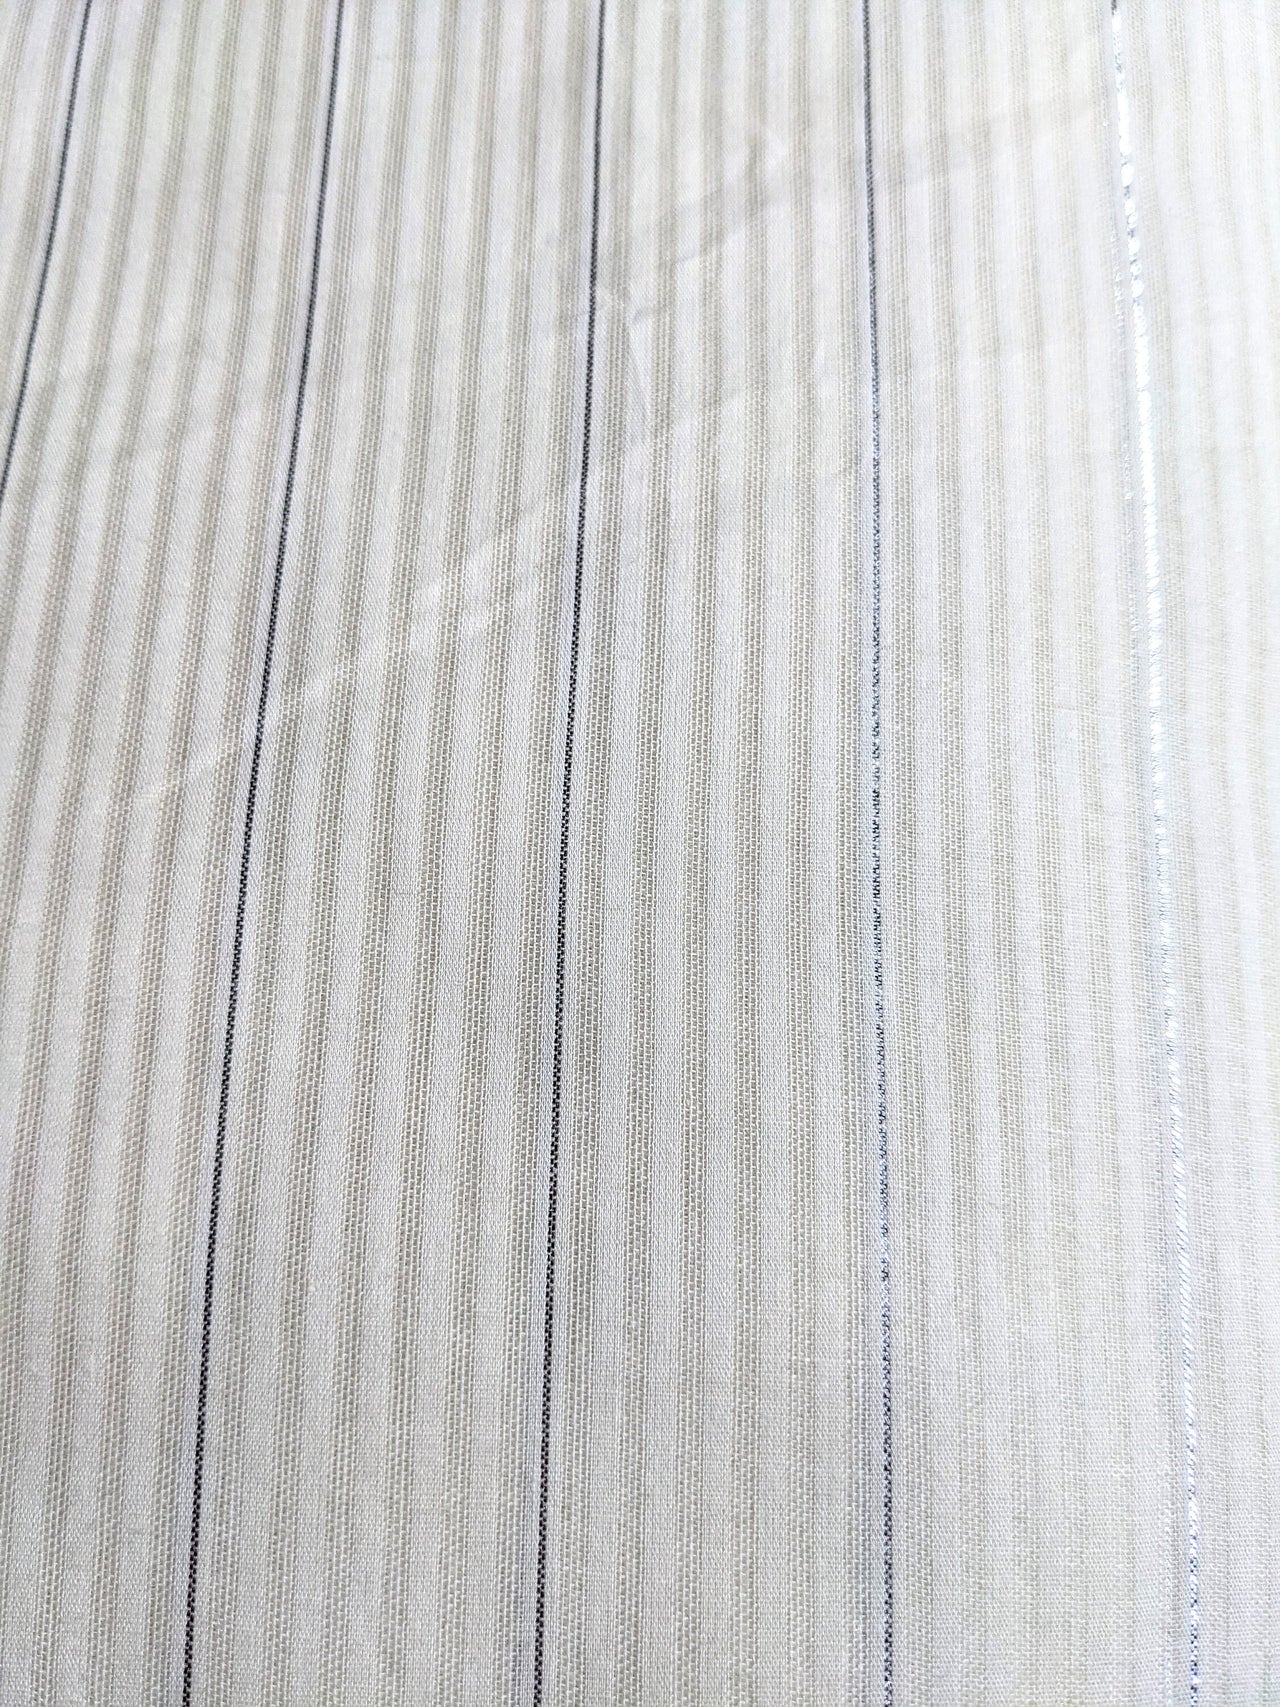 Cream Cotton Silver Stripes Fabric, Striped Handloom Fabric, Quilting Fabric